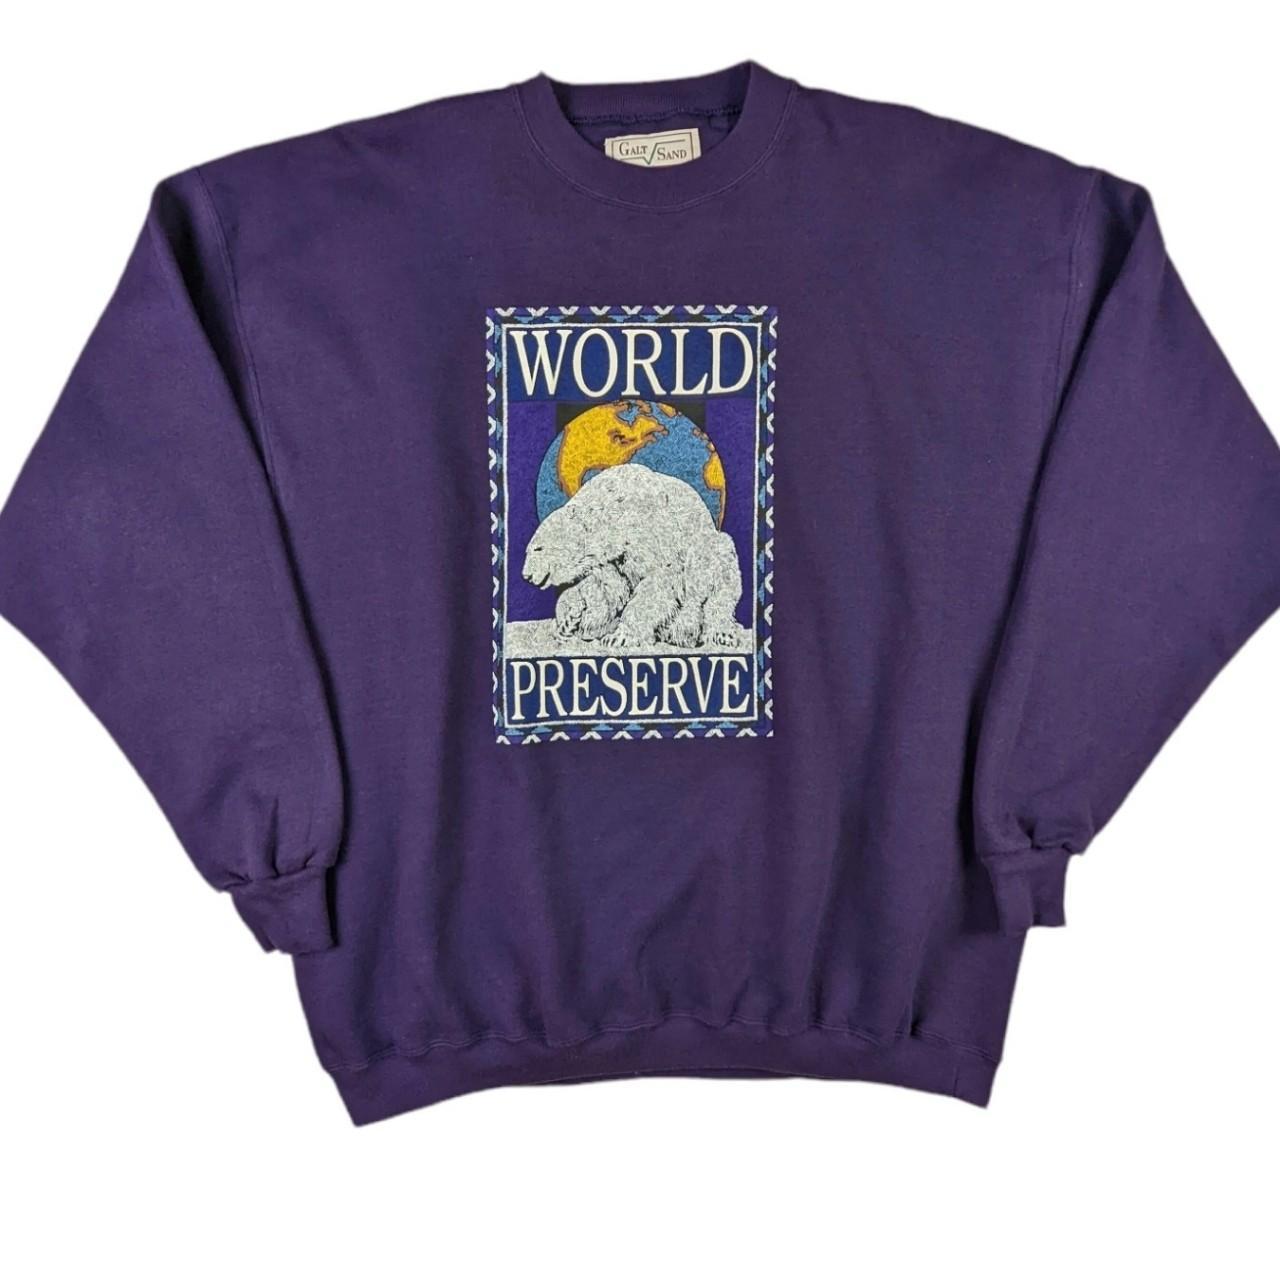 90's Vintage World Preserve Graphic Sweatshirt Size... - Depop